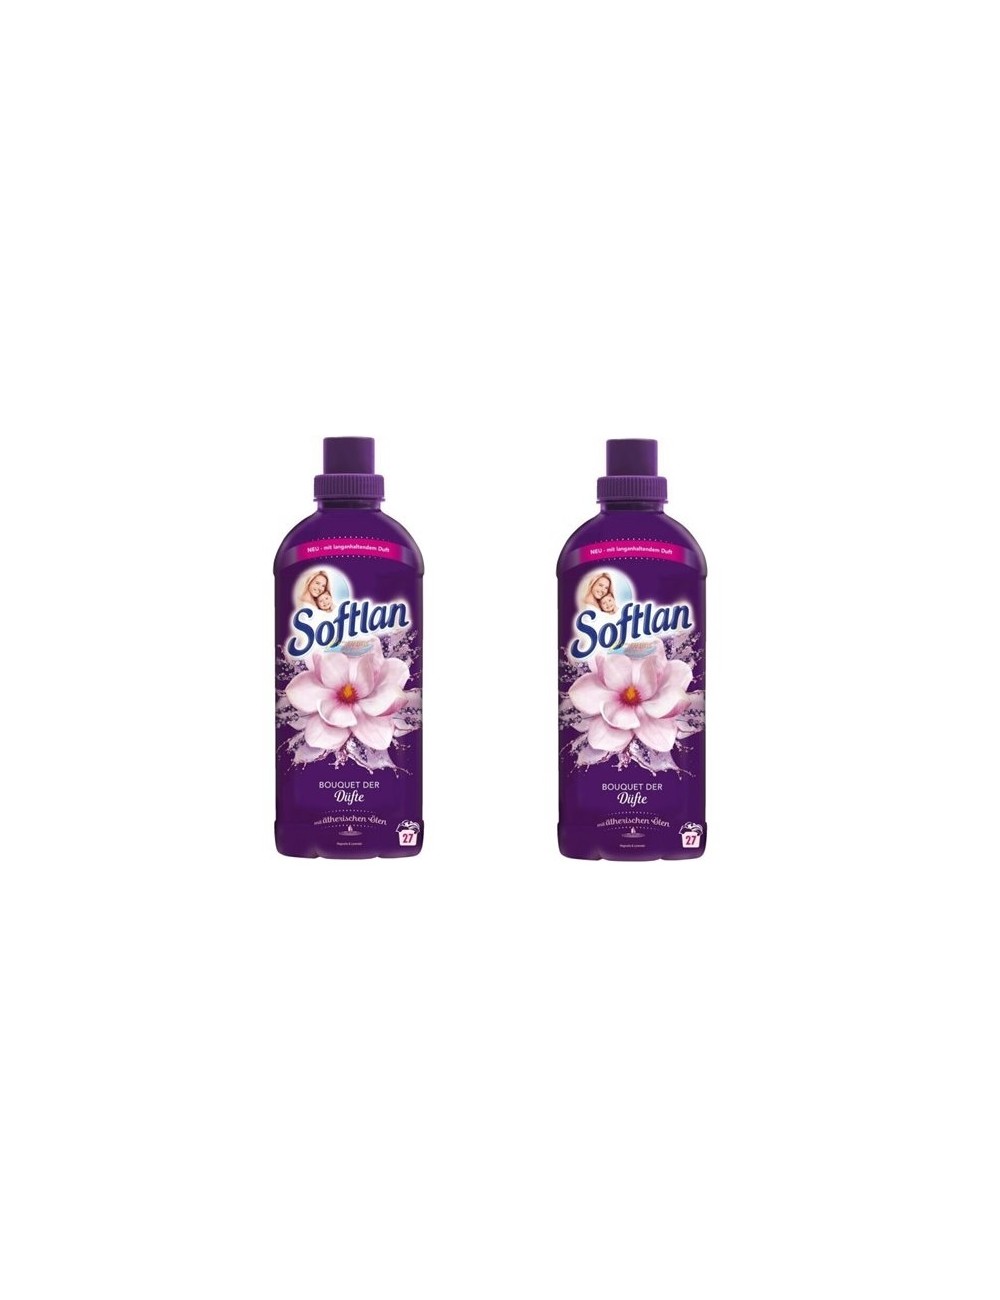 Softlan Płyn do Płukania Tkanin Magnolie & Lavendel Zestaw (2x 650 ml) (54 płukania) (DE)